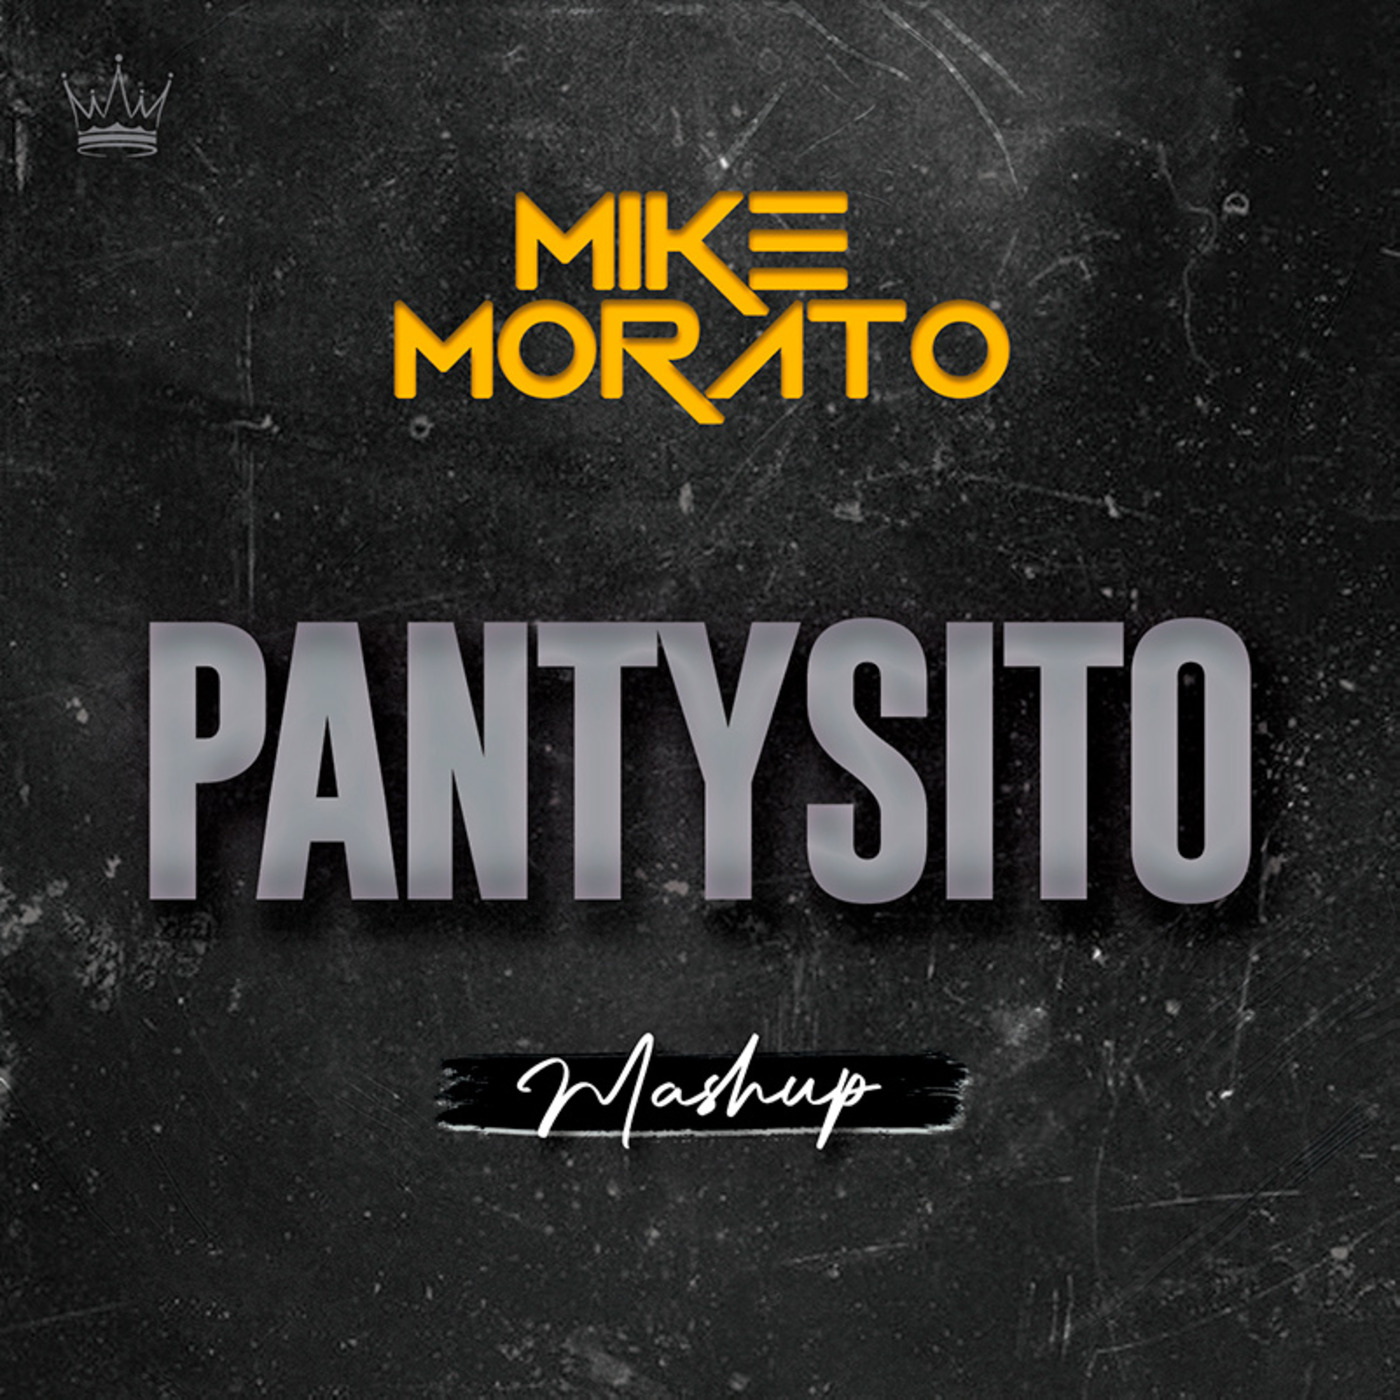 Mike Morato - Pantysito (Mashup)